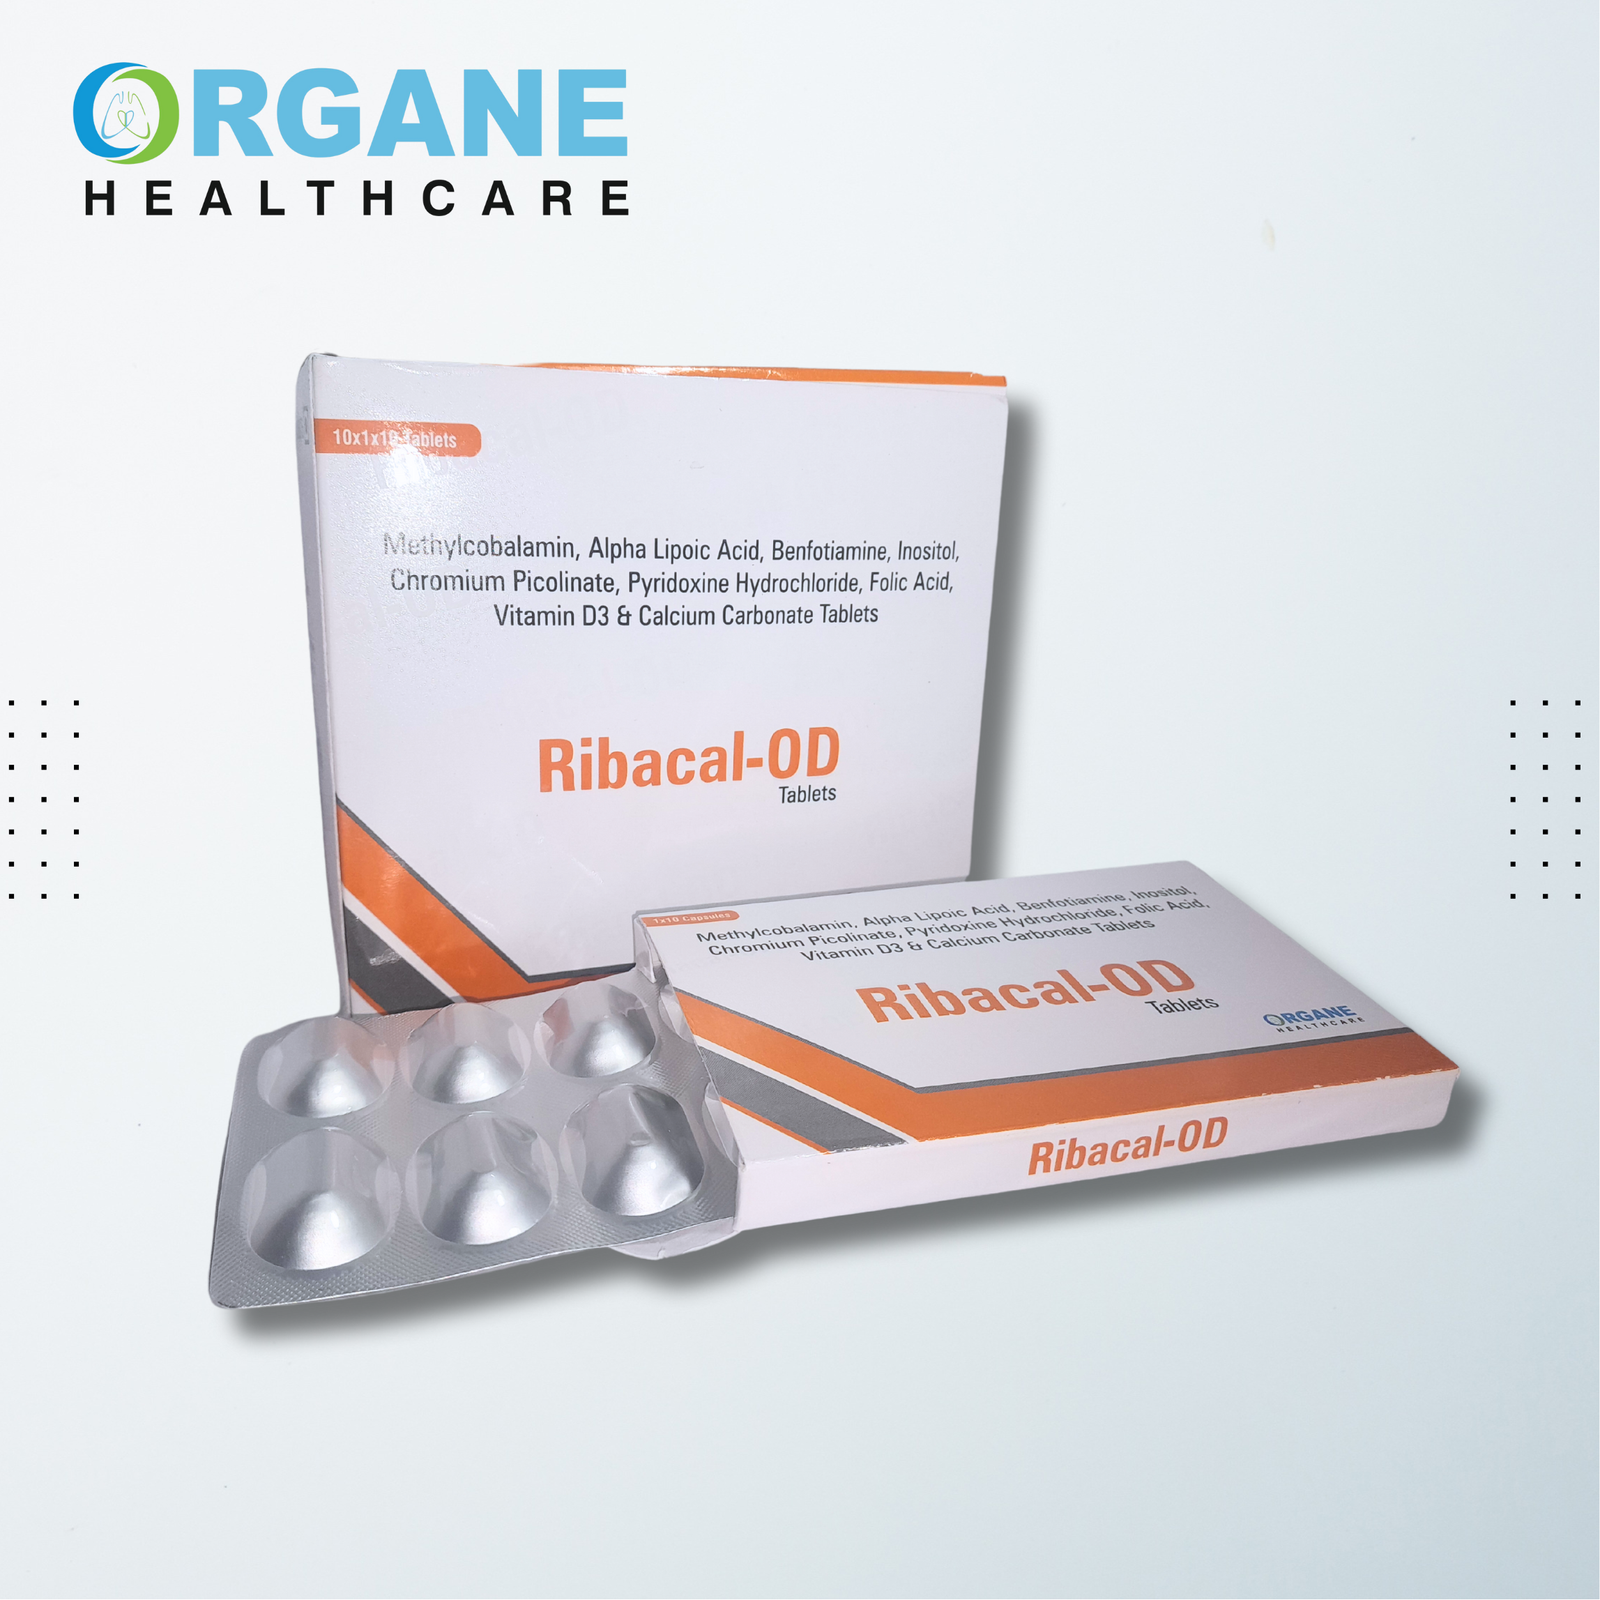 Ribacal - OD - Organe Healthcare Guwahati